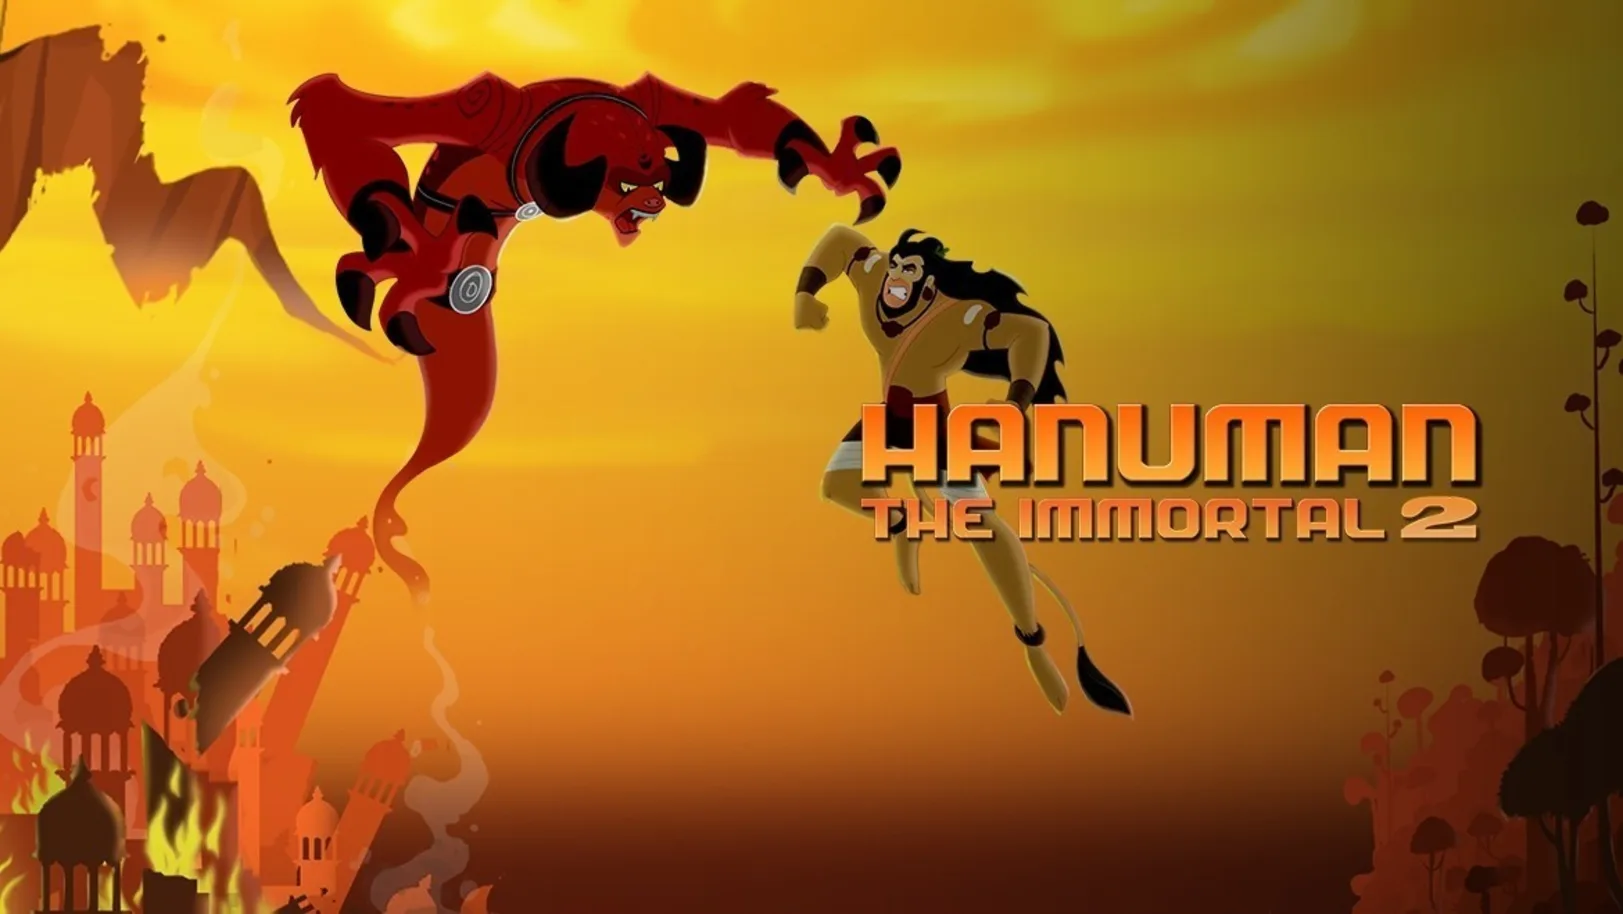 Hanuman The Immortal-II Movie